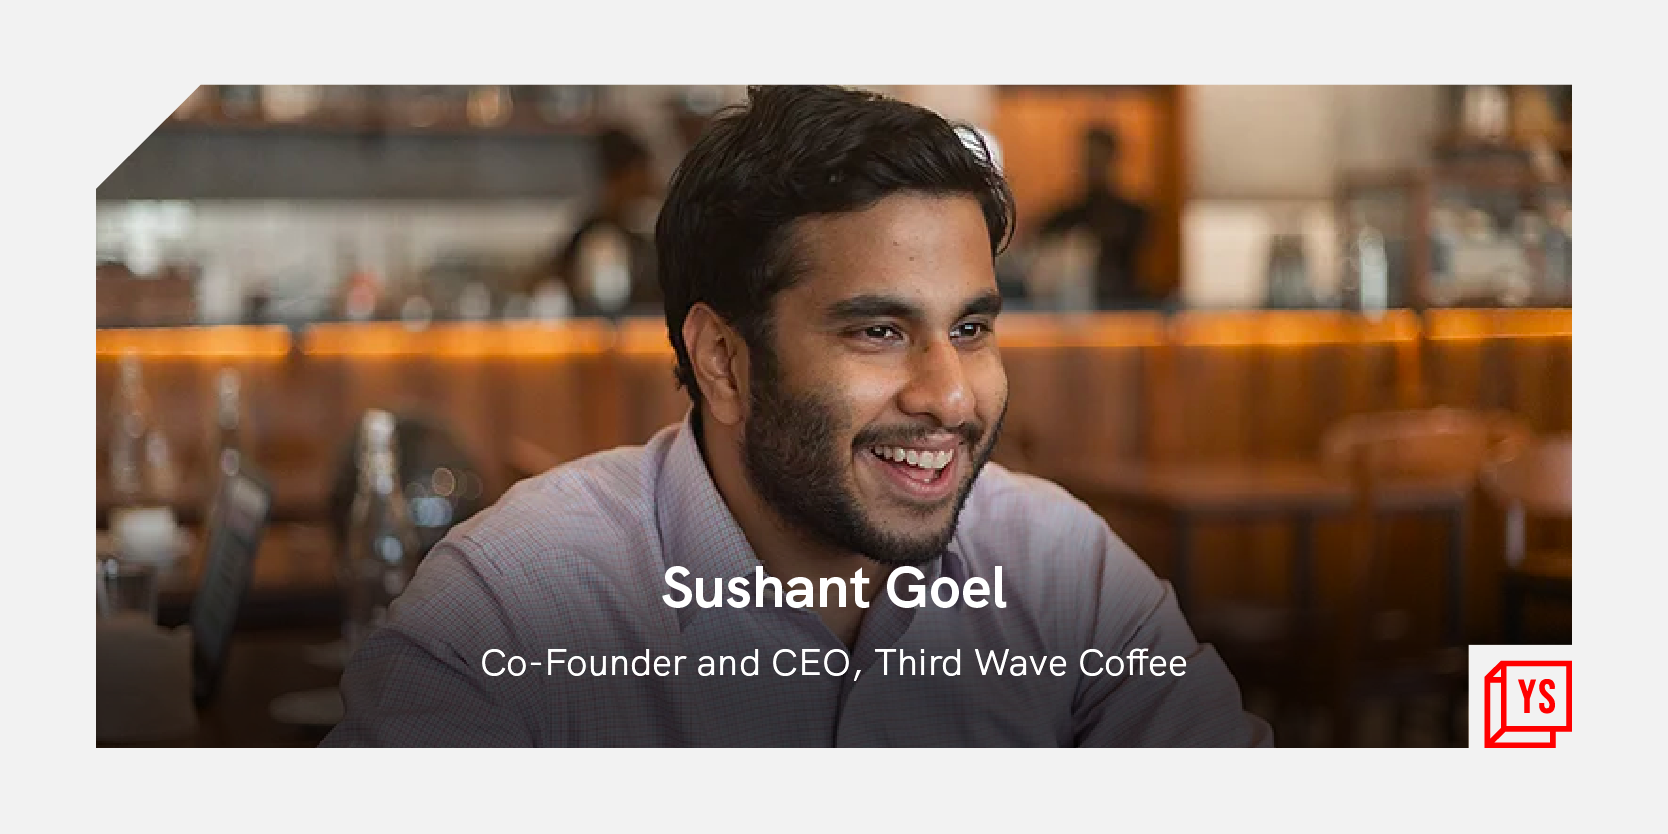 Third Wave Coffee raises $6 million in series A round